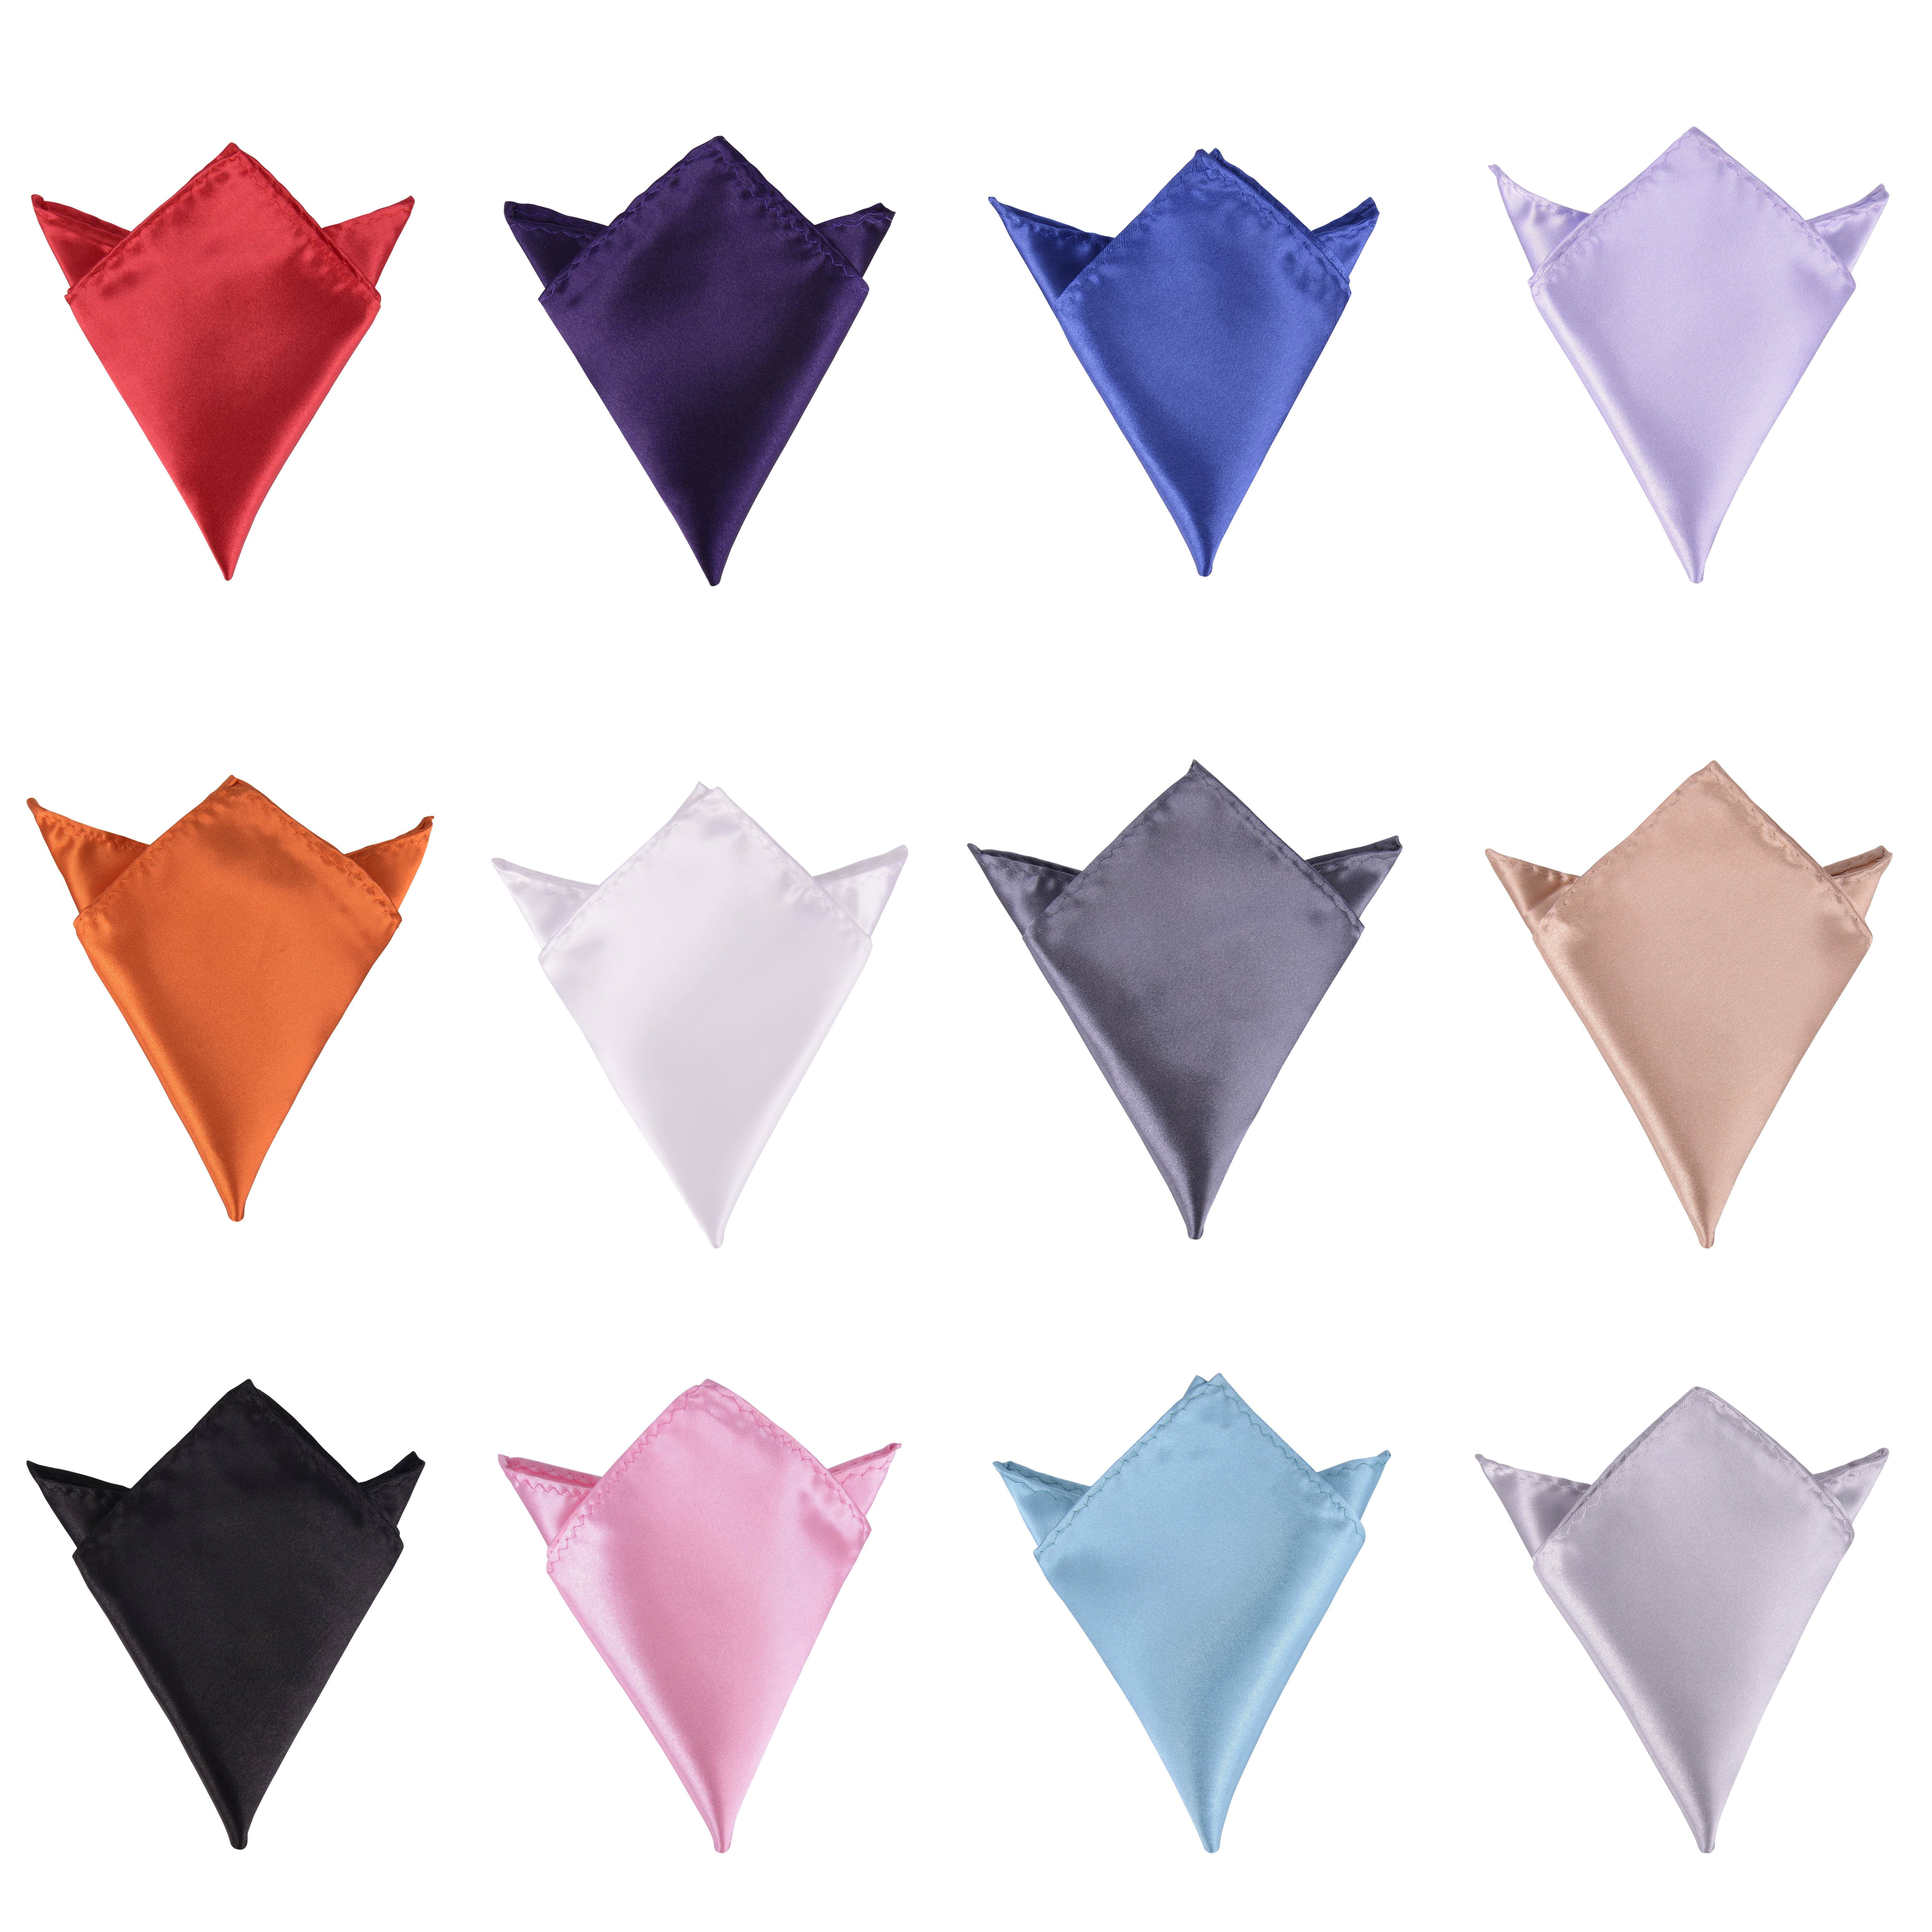 New men's polyester solid lavender hankie pocket square formal wedding party 